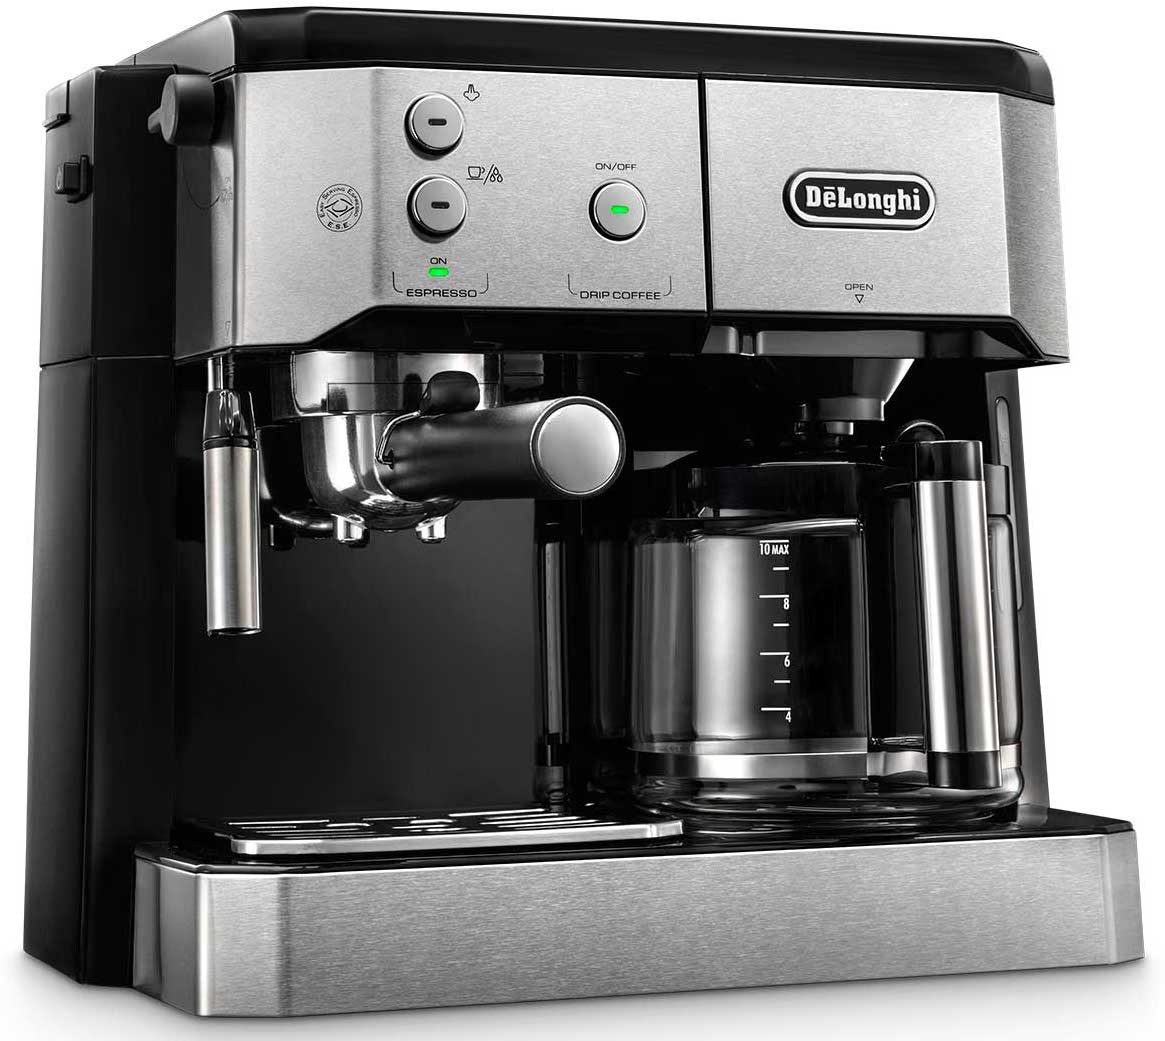 DeLonghi BCO421.S Combi Dual Coffee Machine